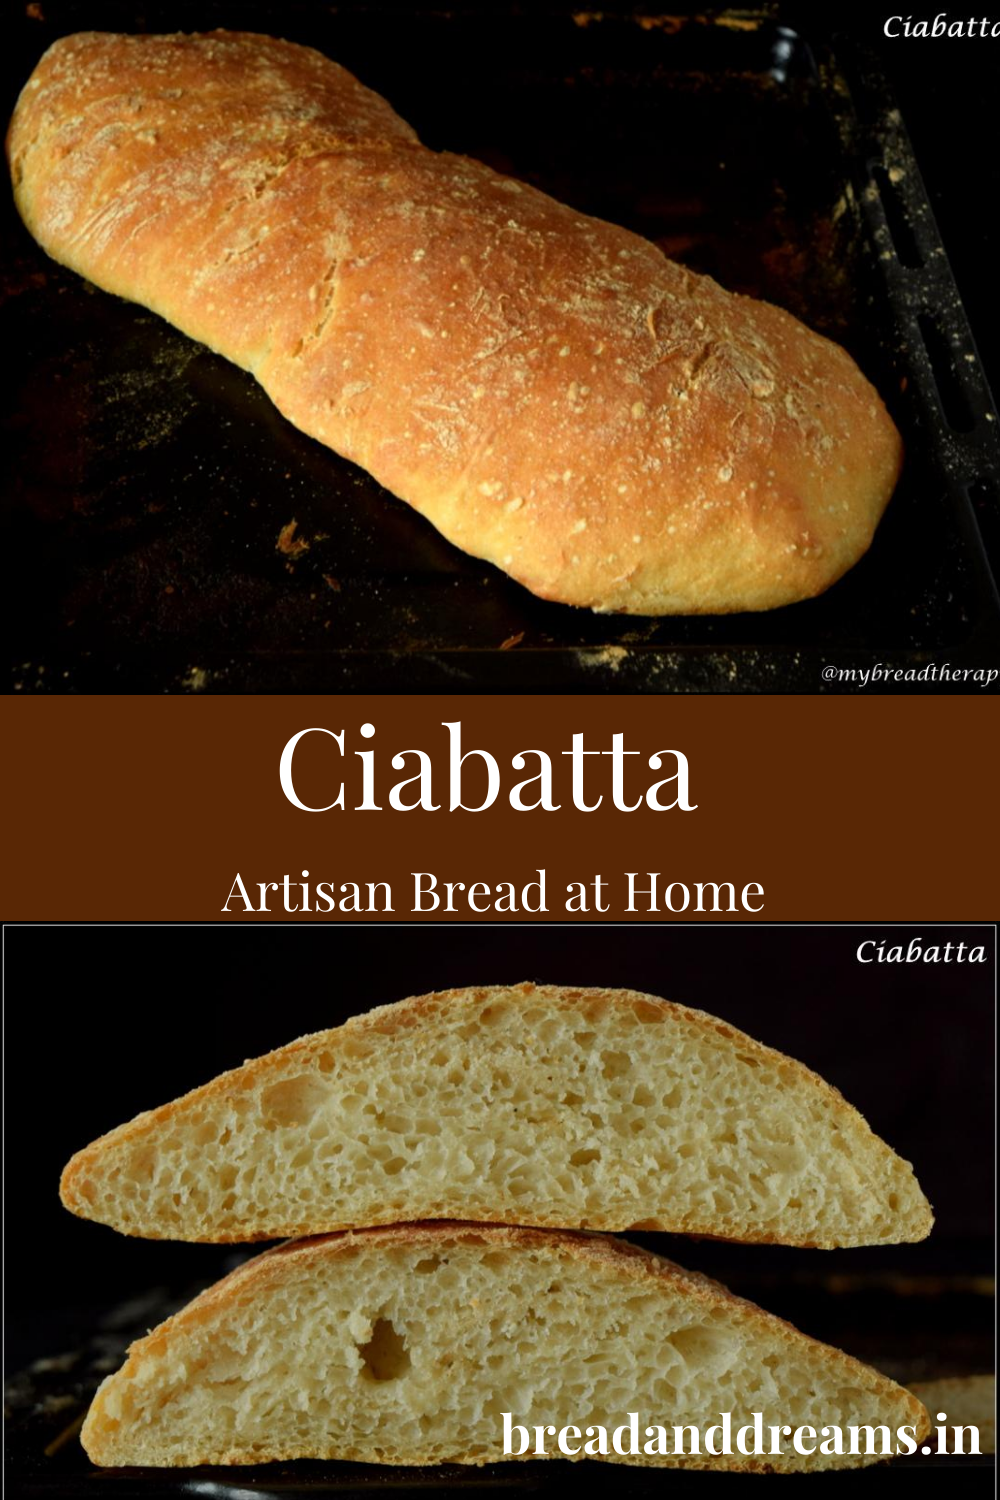 Artisan bread at home - Ciabatta